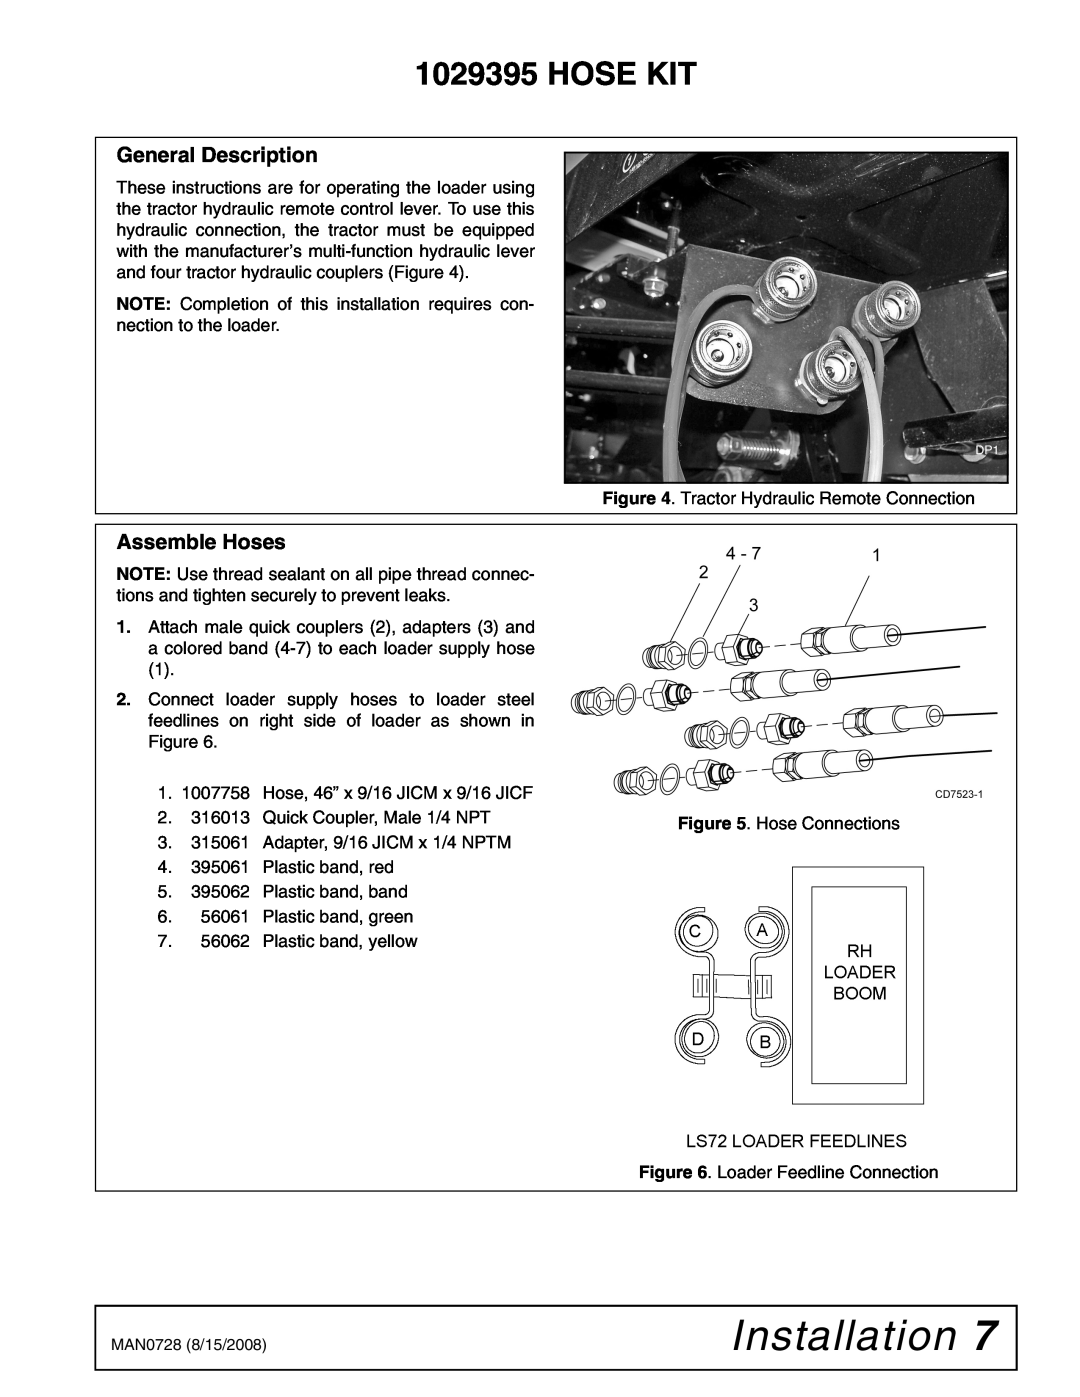 Woods Equipment 2100042 installation manual Installation, Hose Kit, General Description, Assemble Hoses 